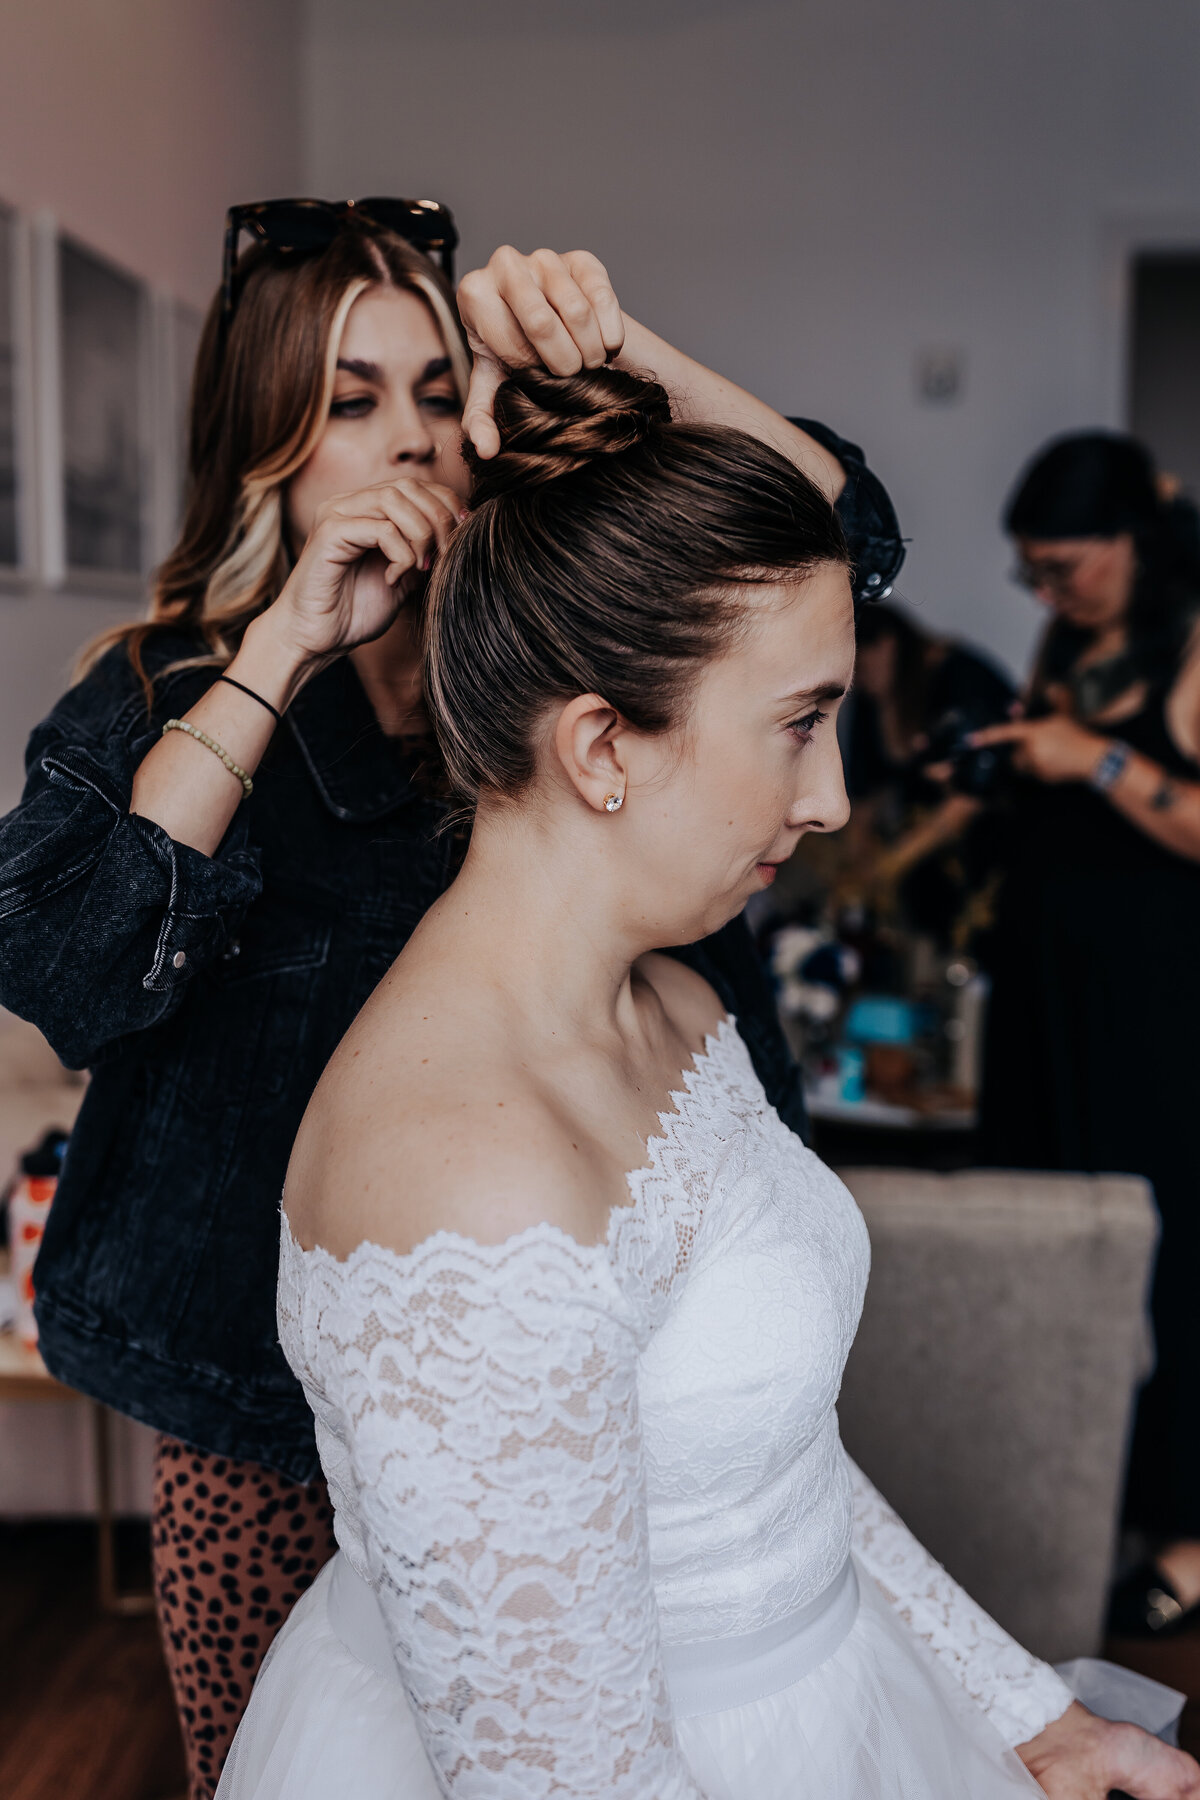 Nashville wedding photographer captures bride getting ready for wedding